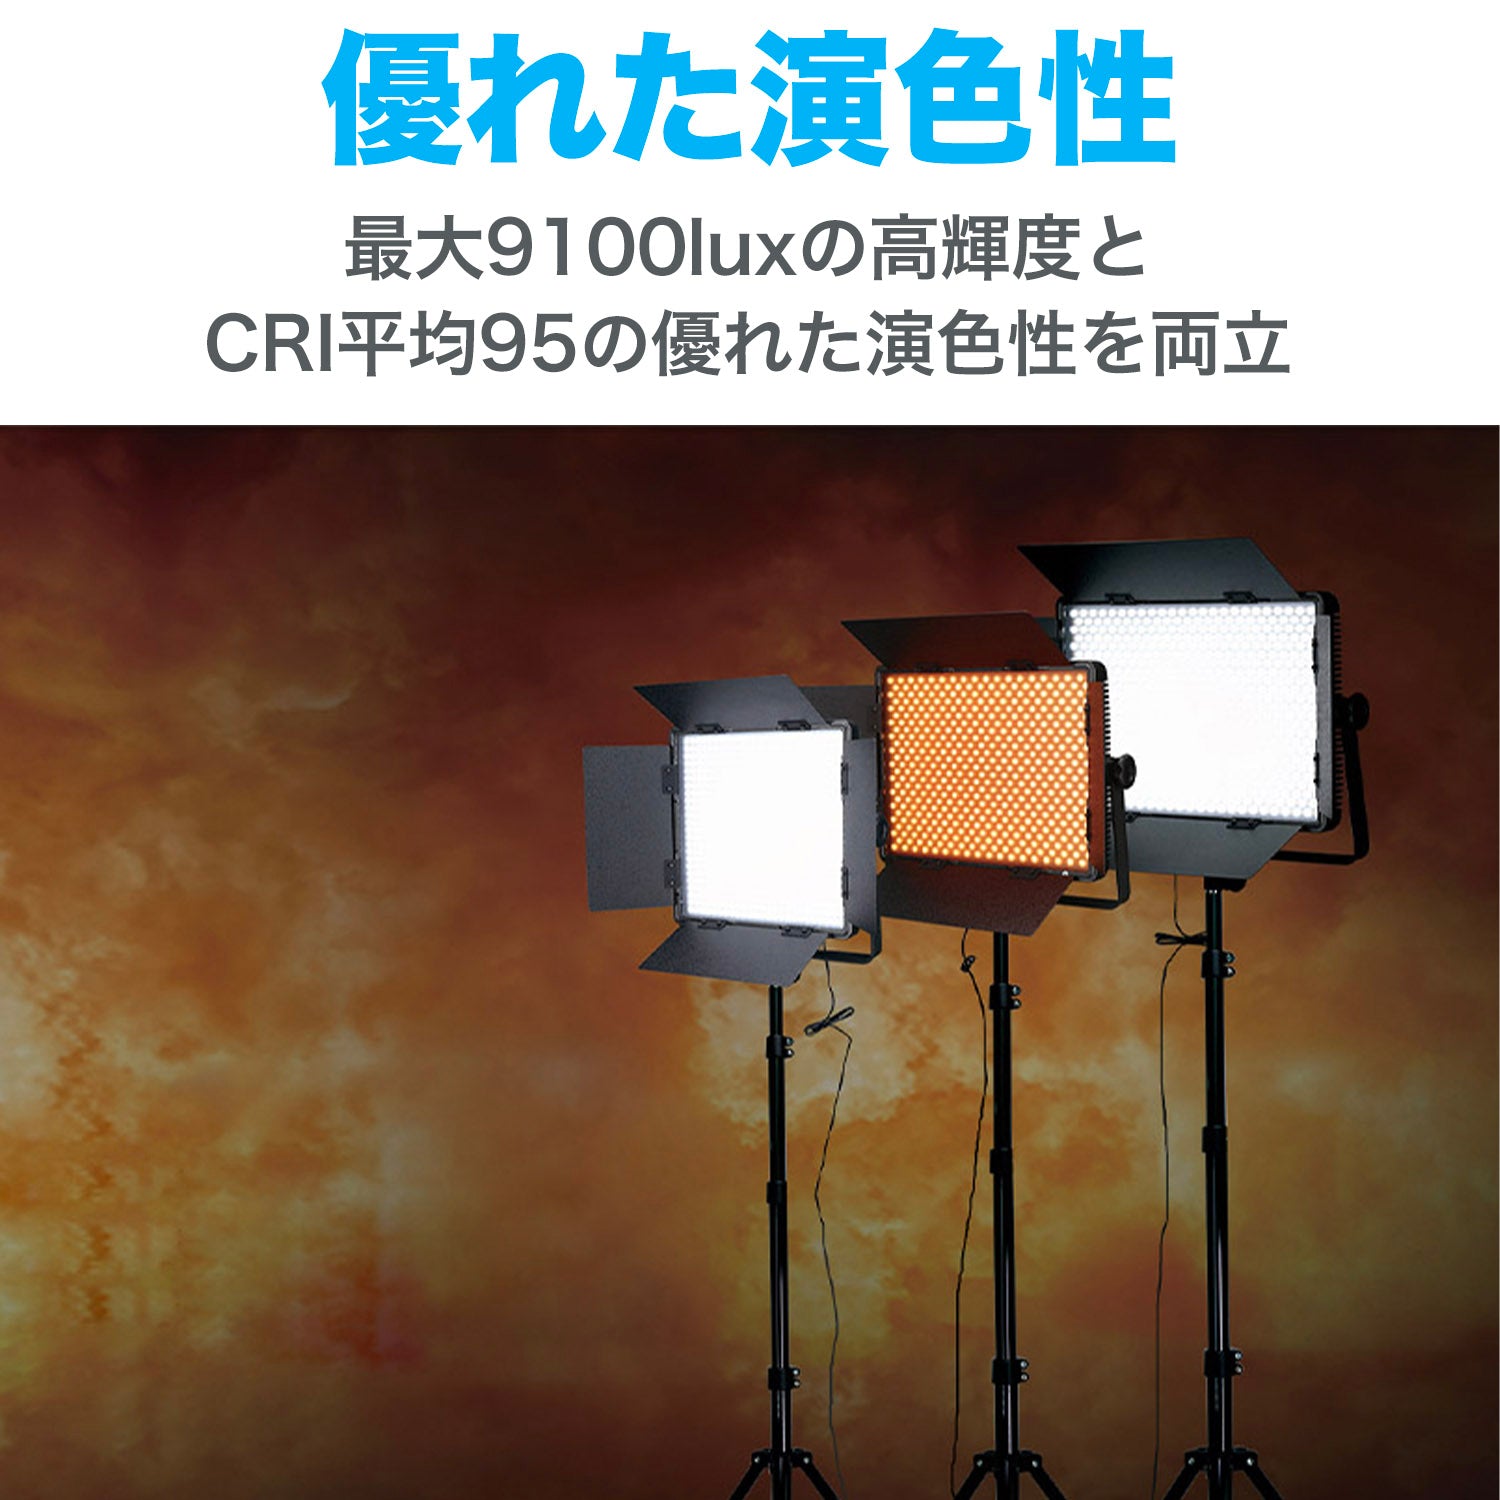 NANLITE 1200SA ナンライト 撮影用ライト パネル型LEDライト LEDスタジオライトLIVE配信 動画撮影 色温度5600K –  NANLITE JAPAN